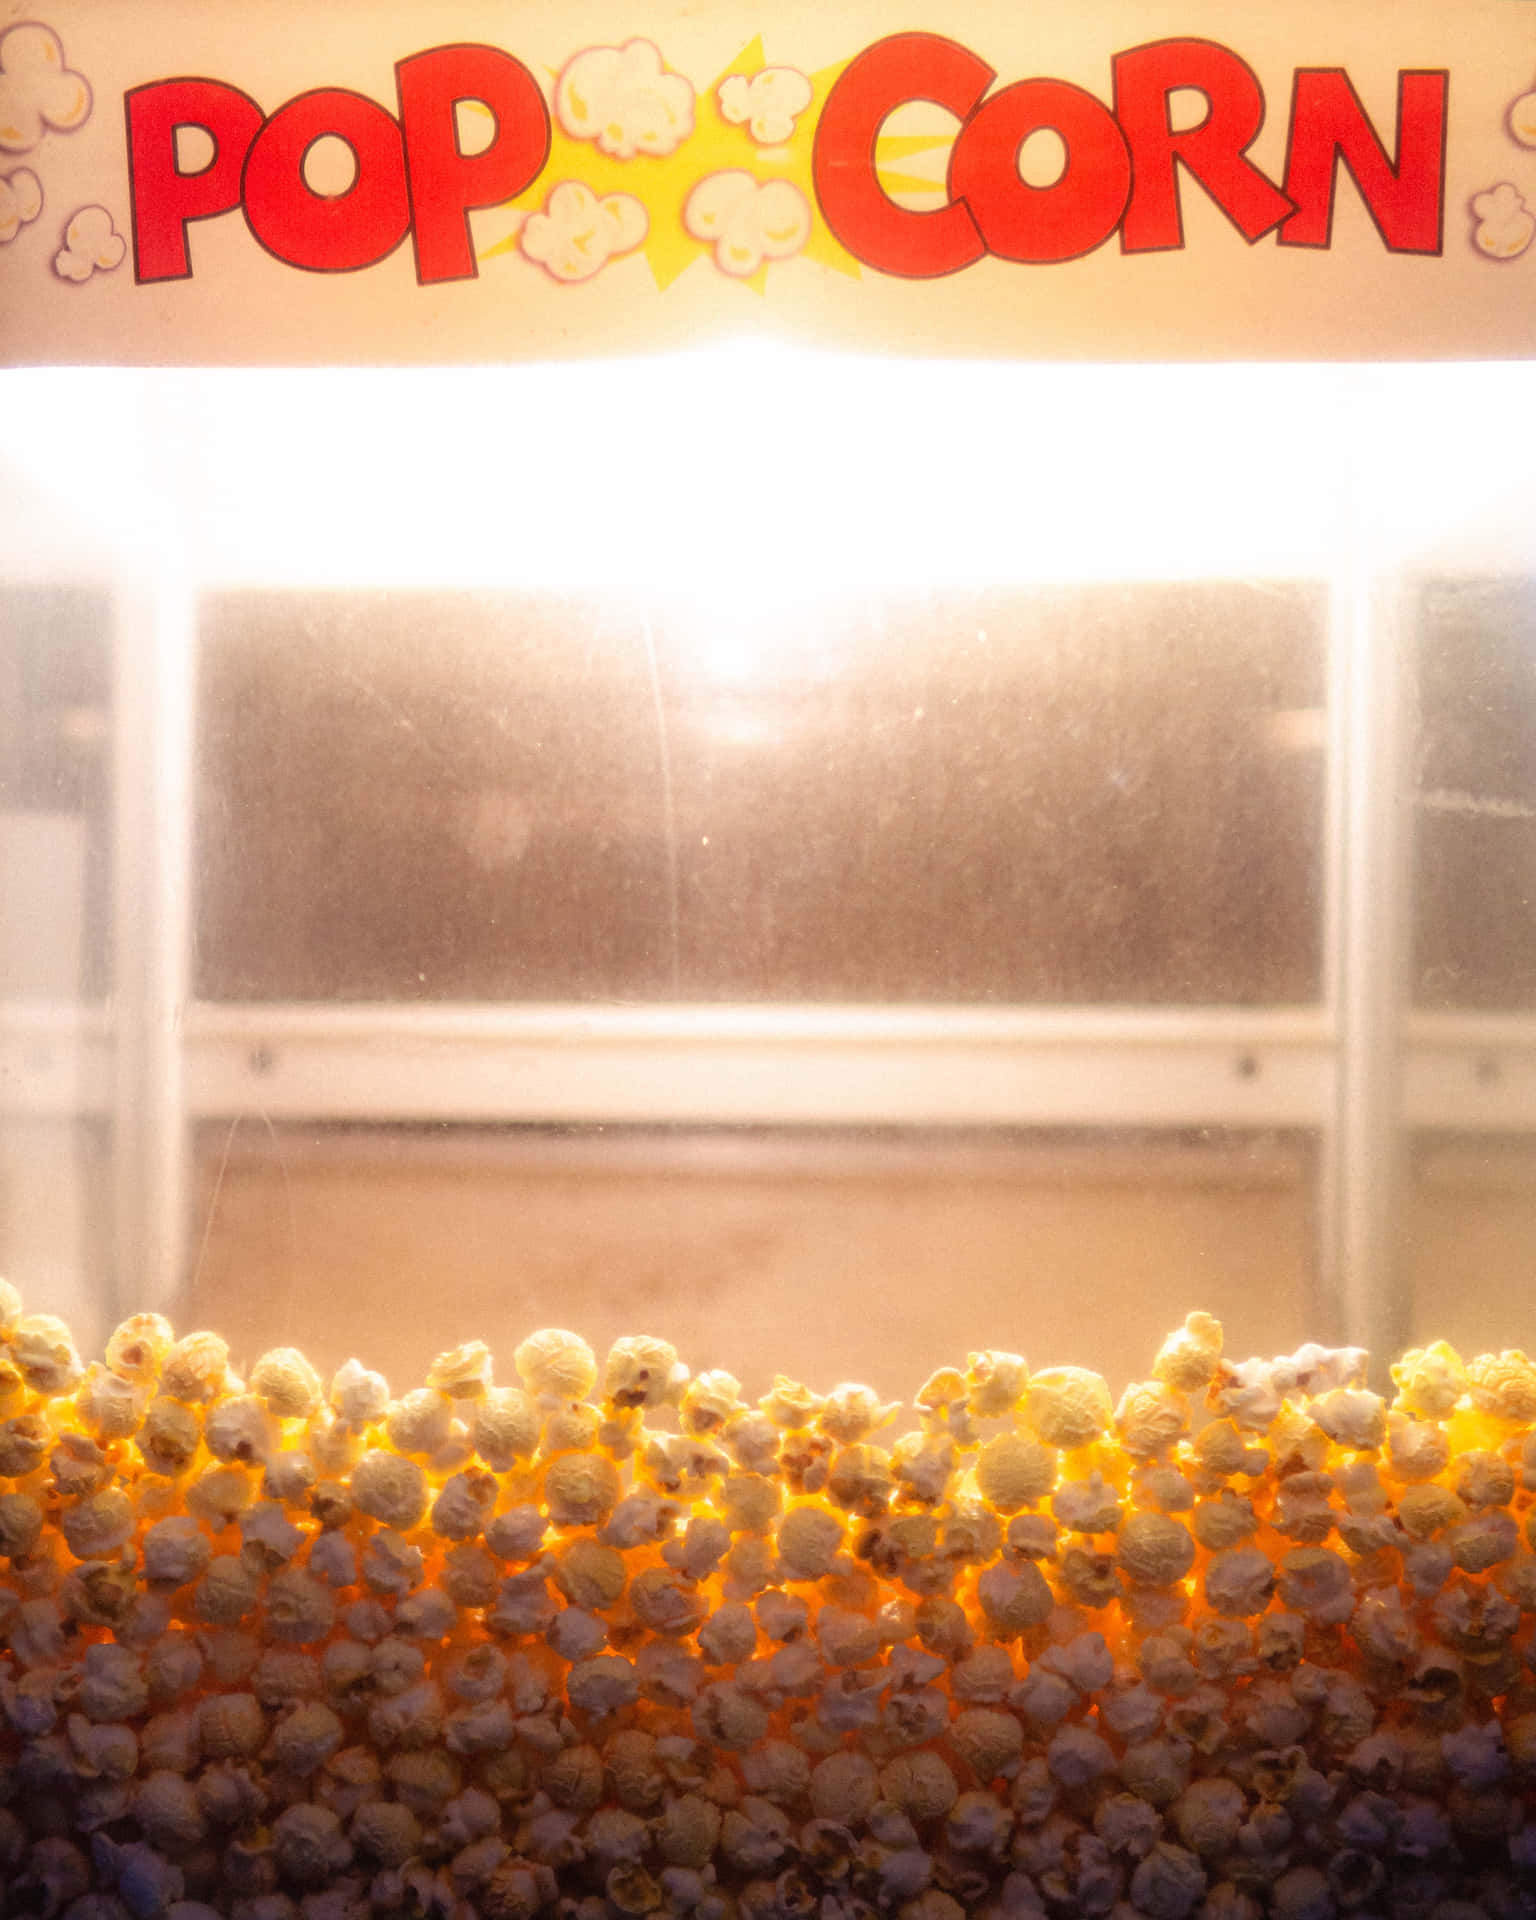 A Popcorn Machine With Popcorn Inside